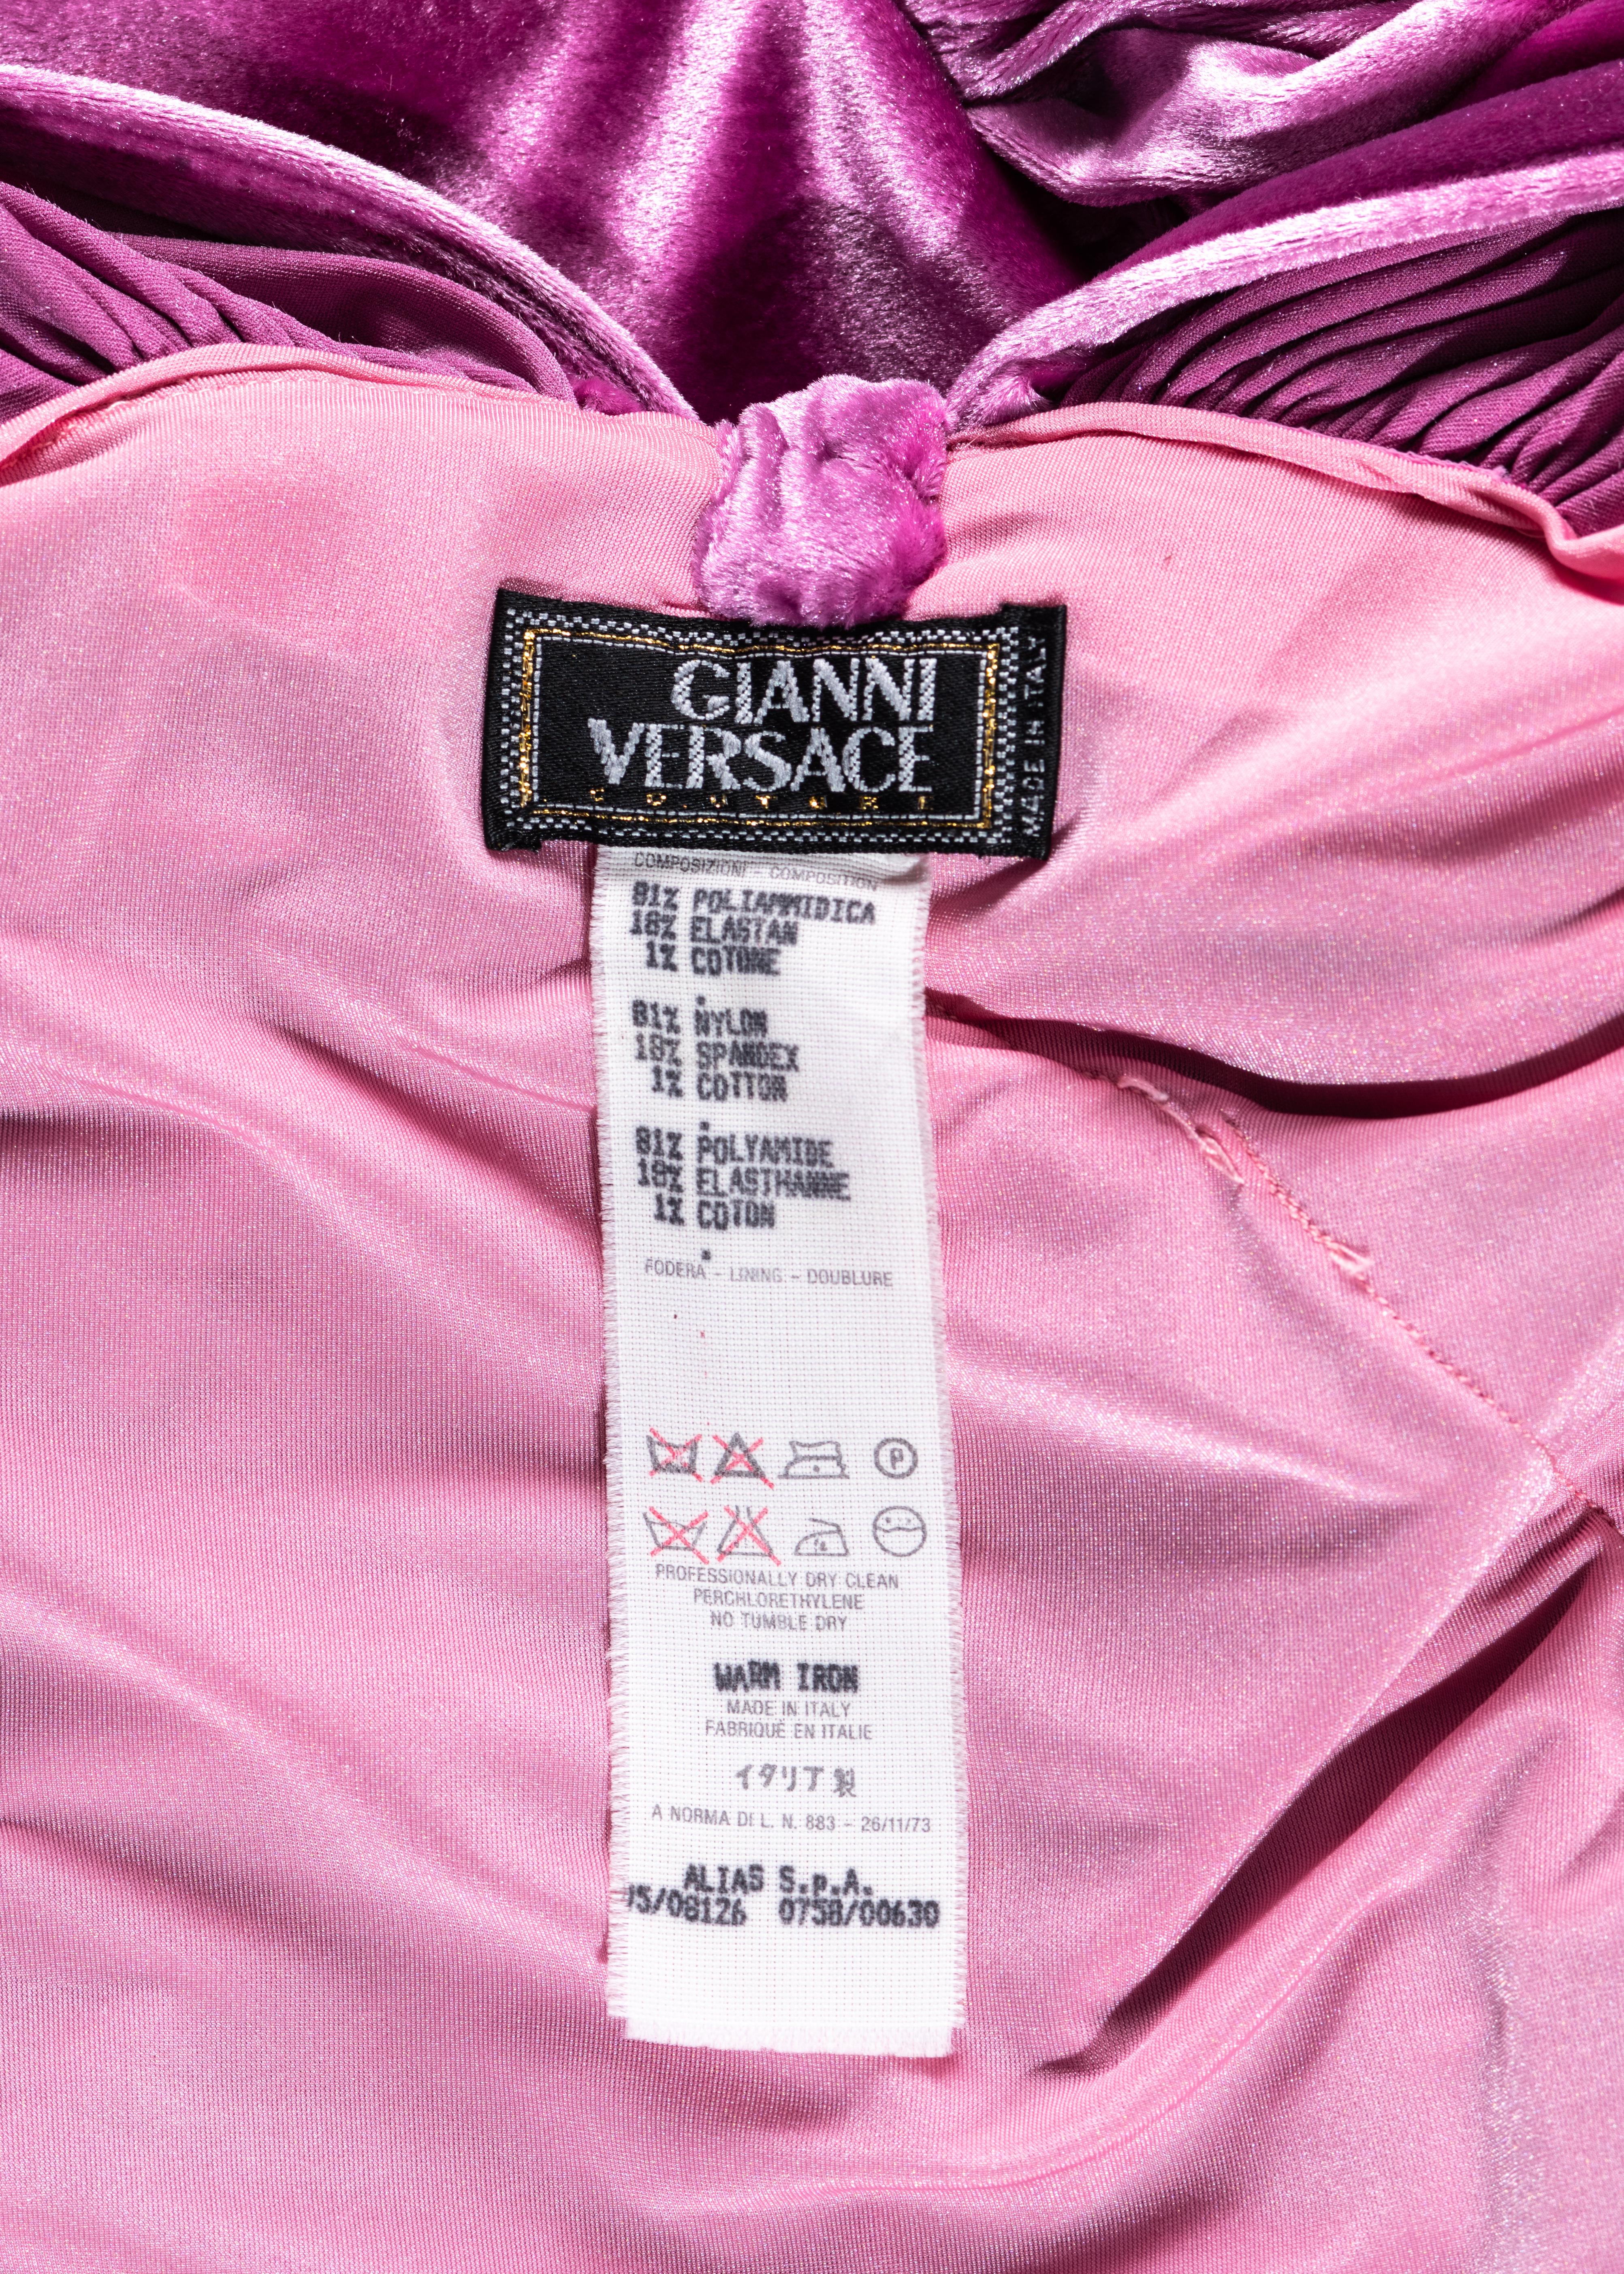 Gianni Versace magenta pink velvet ruched evening dress, fw 1995 4